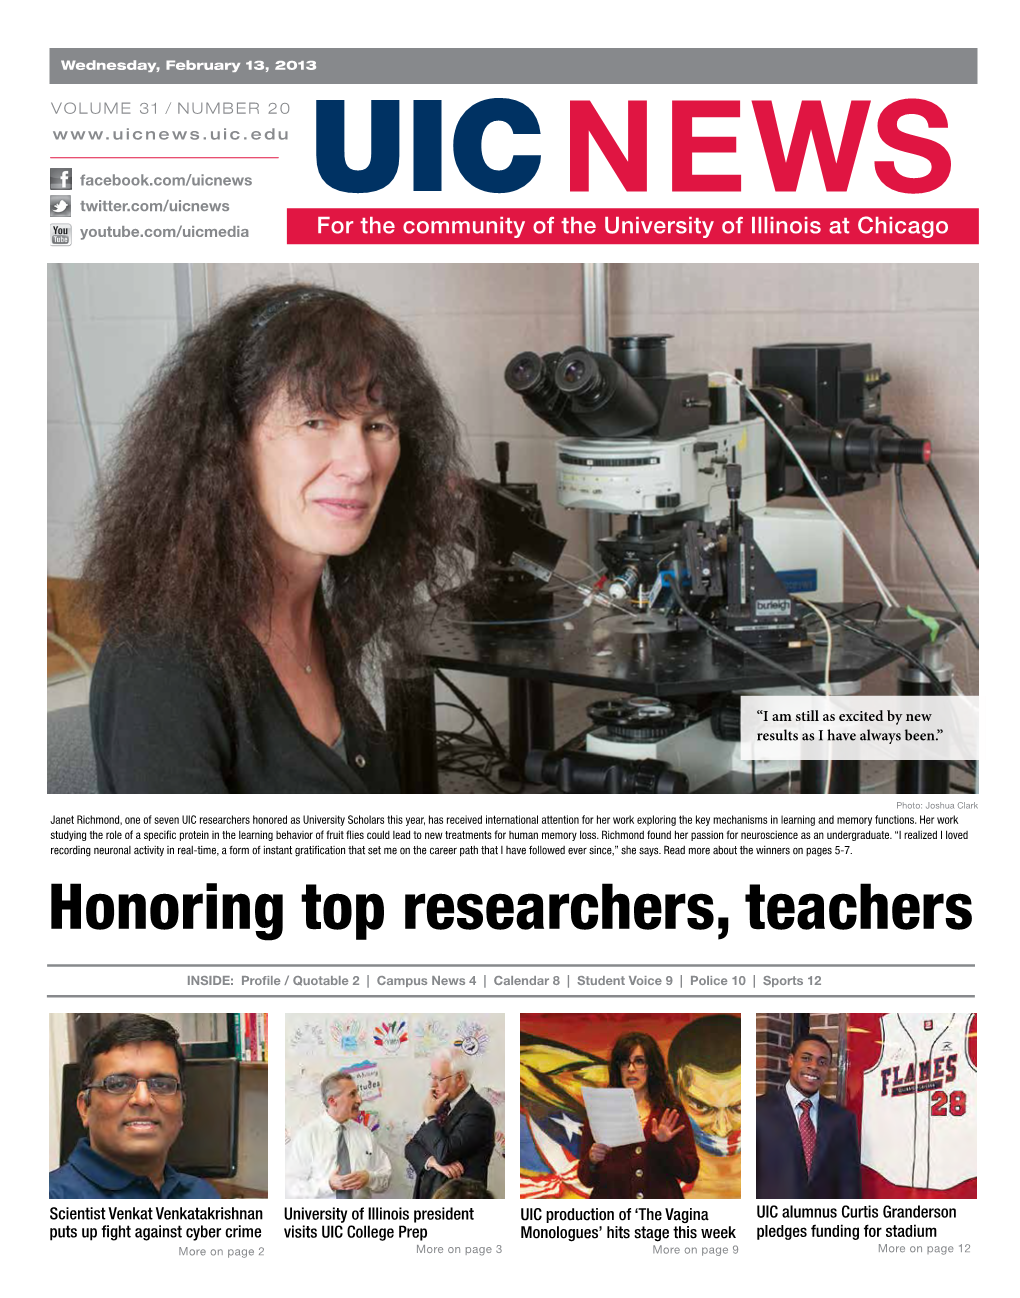 Honoring Top Researchers, Teachers